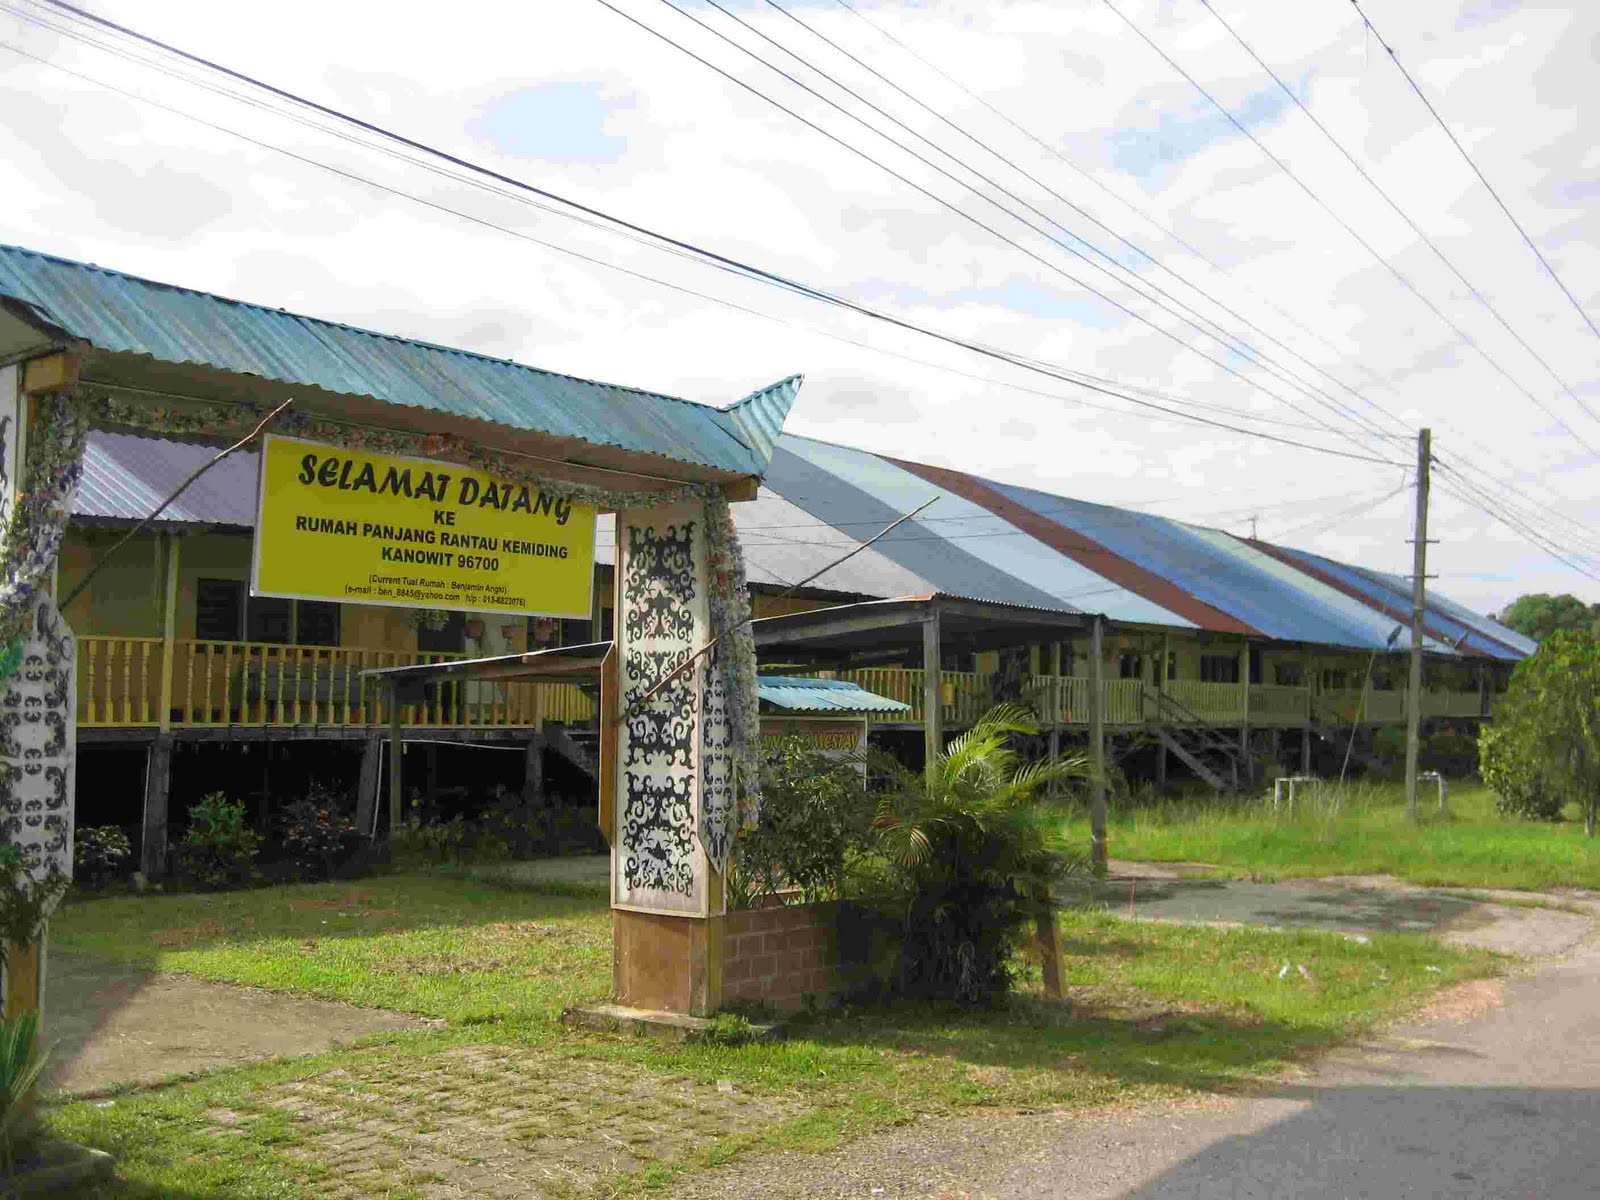 Image shows welcome sign and entrance to Rantau Kemiding longhouse. Photo credit: Rantau Kemiding blogspot.